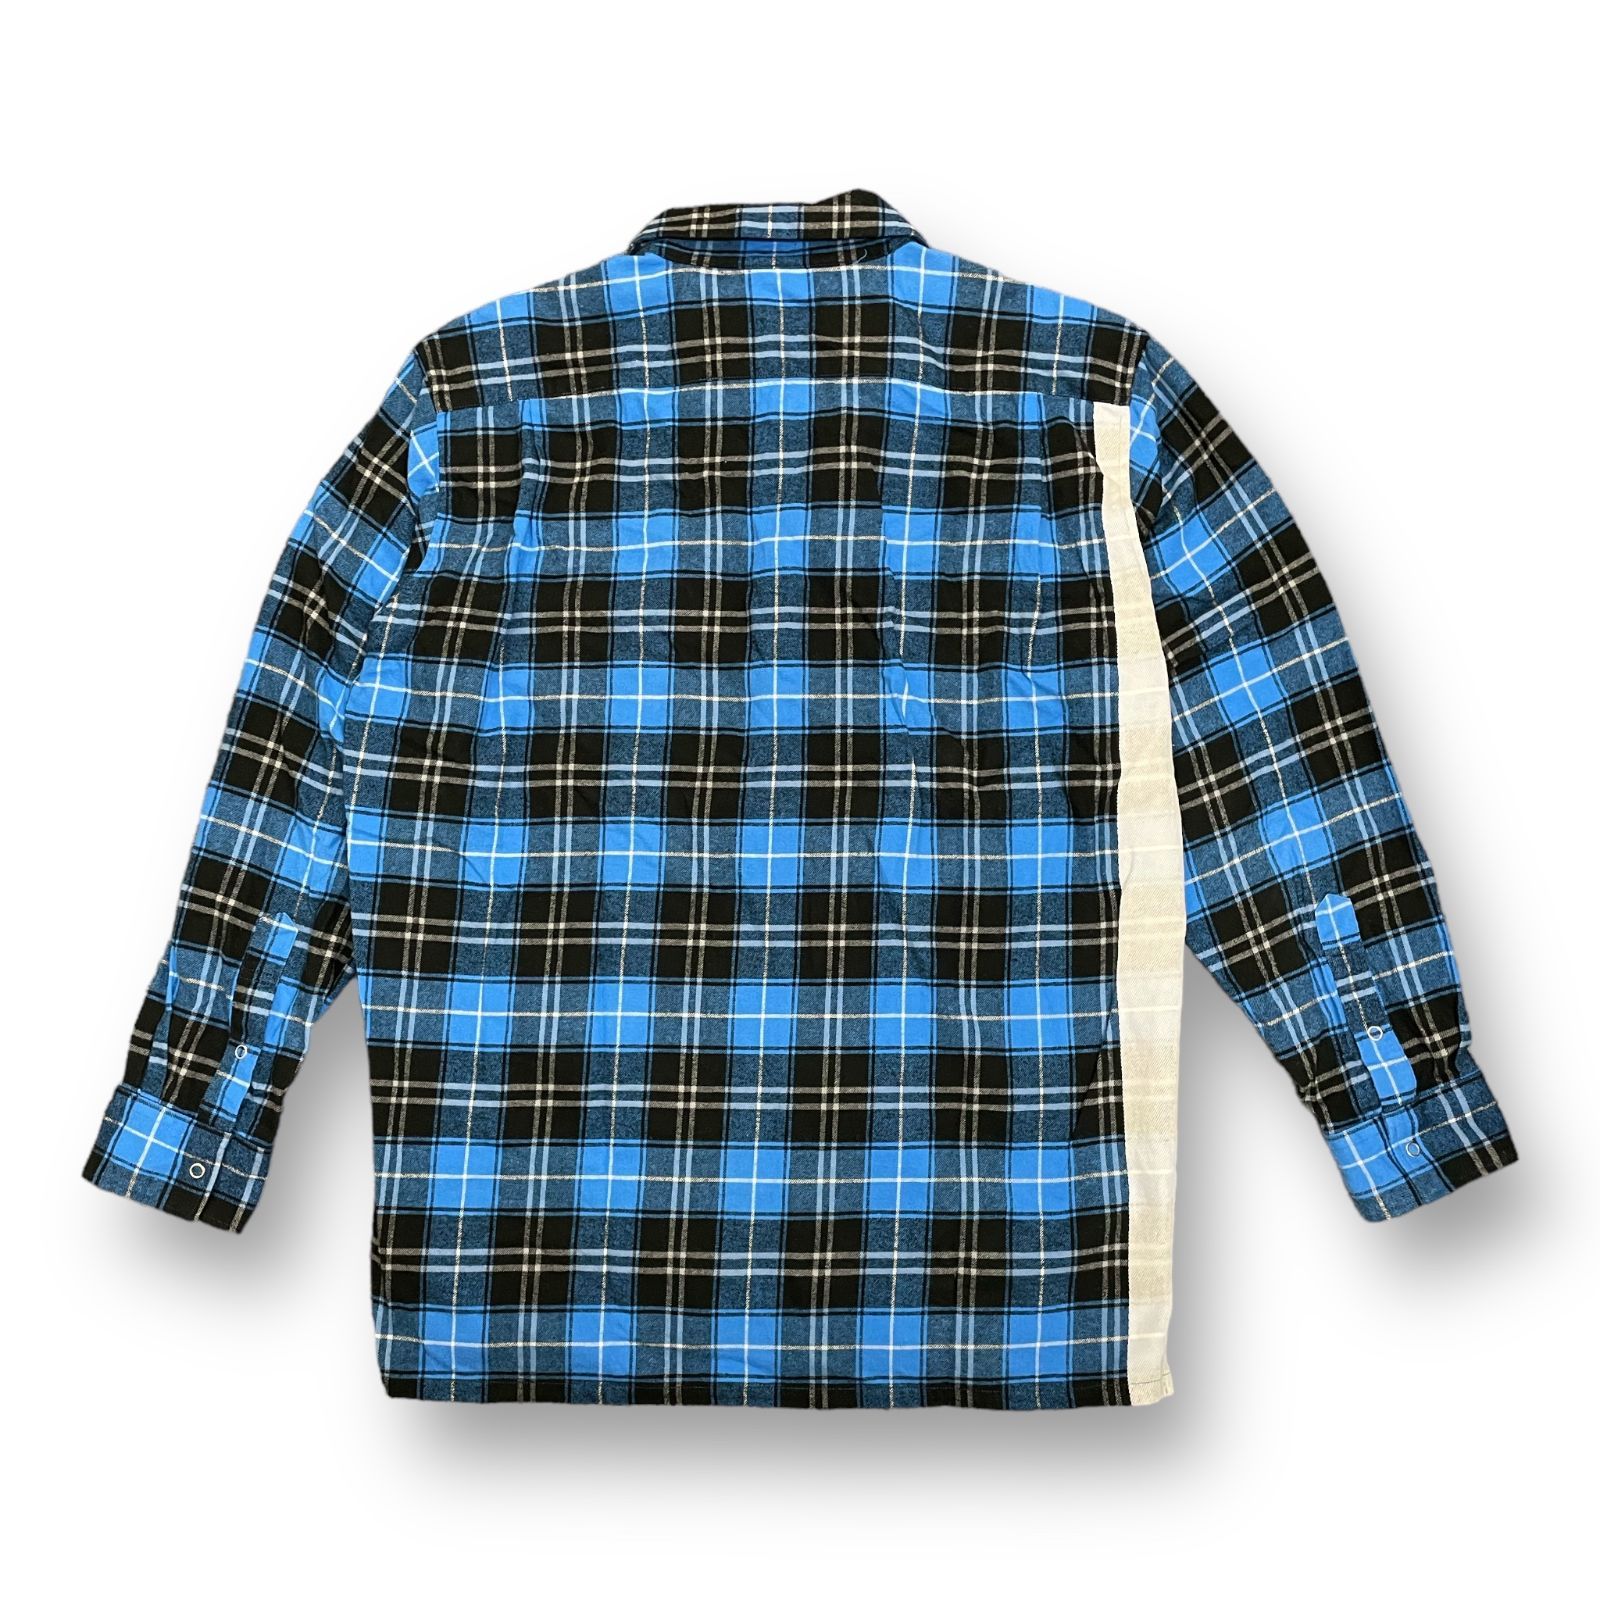 SEQUEL 22AW CHECK SHIRT ラインチェックシャツ Lfragmentdesign - シャツ